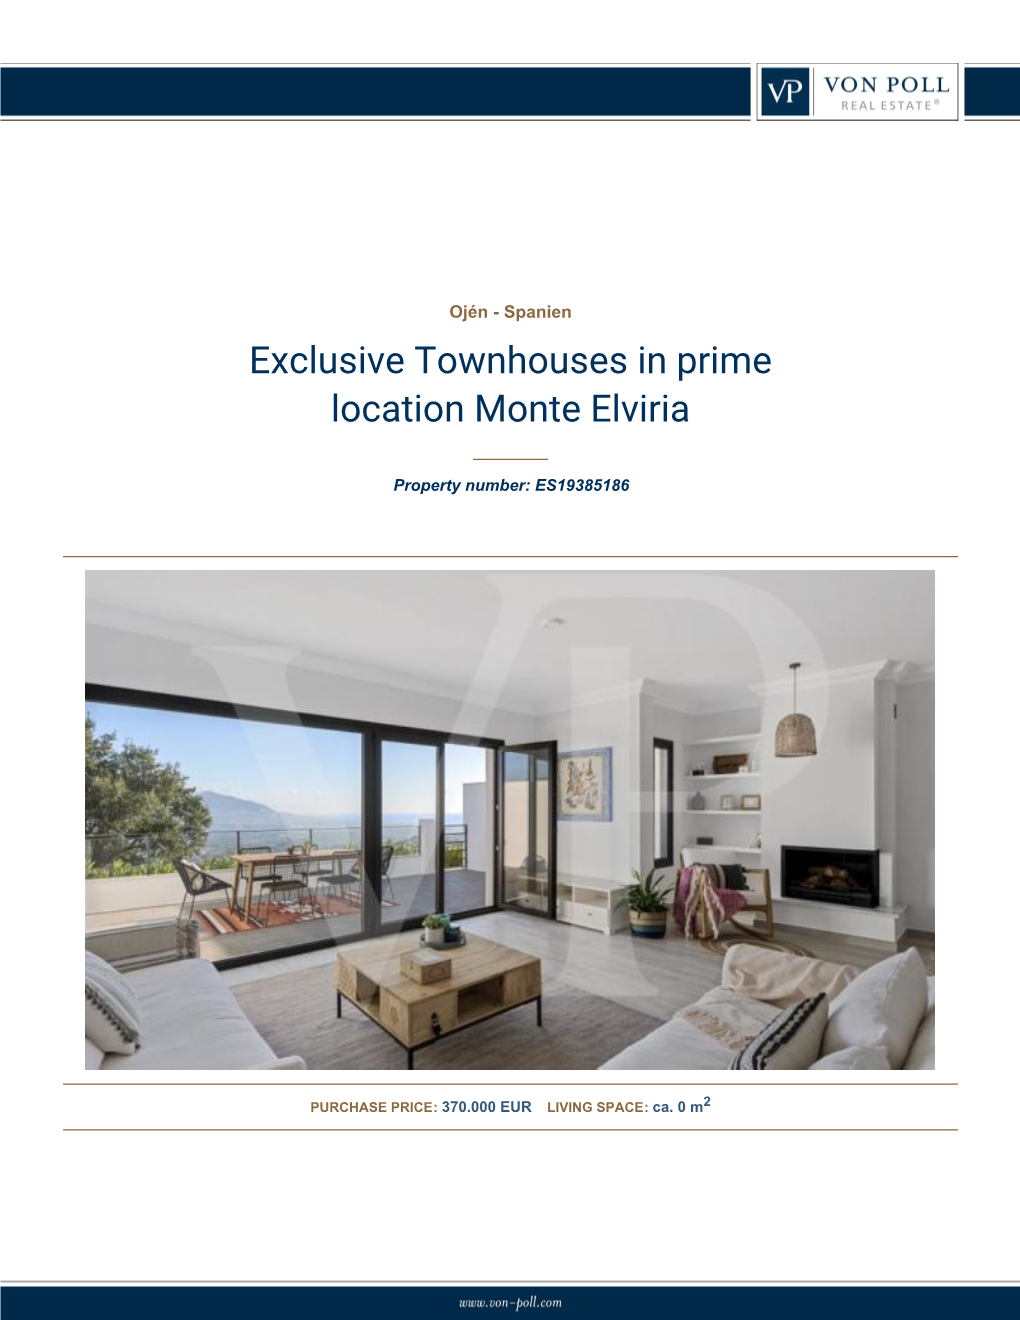 Exclusive Townhouses in Prime Location Monte Elviria